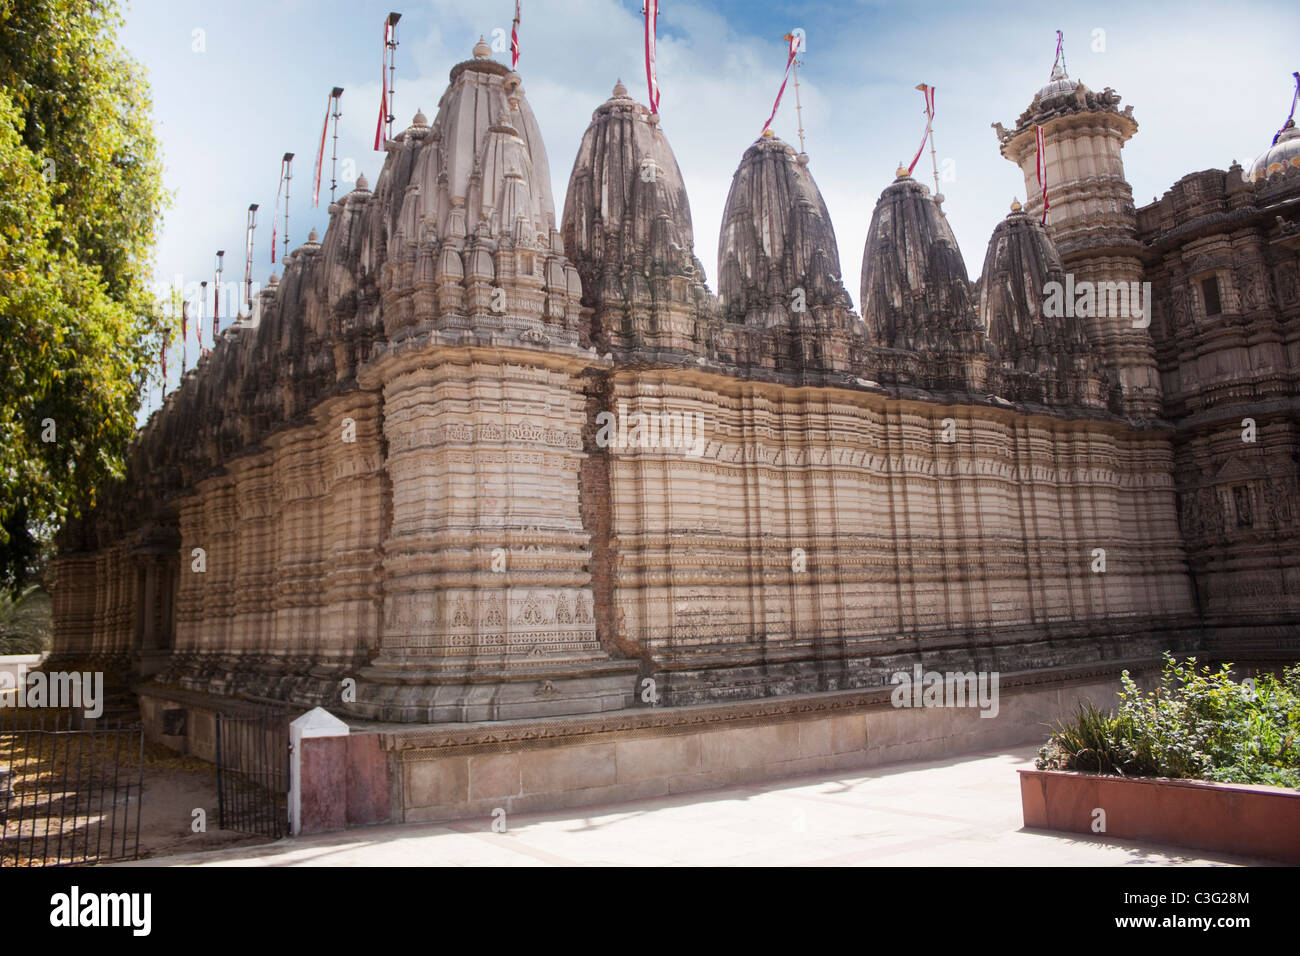 Architectural details of a temple, Swaminarayan Akshardham Temple, Ahmedabad, Gujarat, India Stock Photo